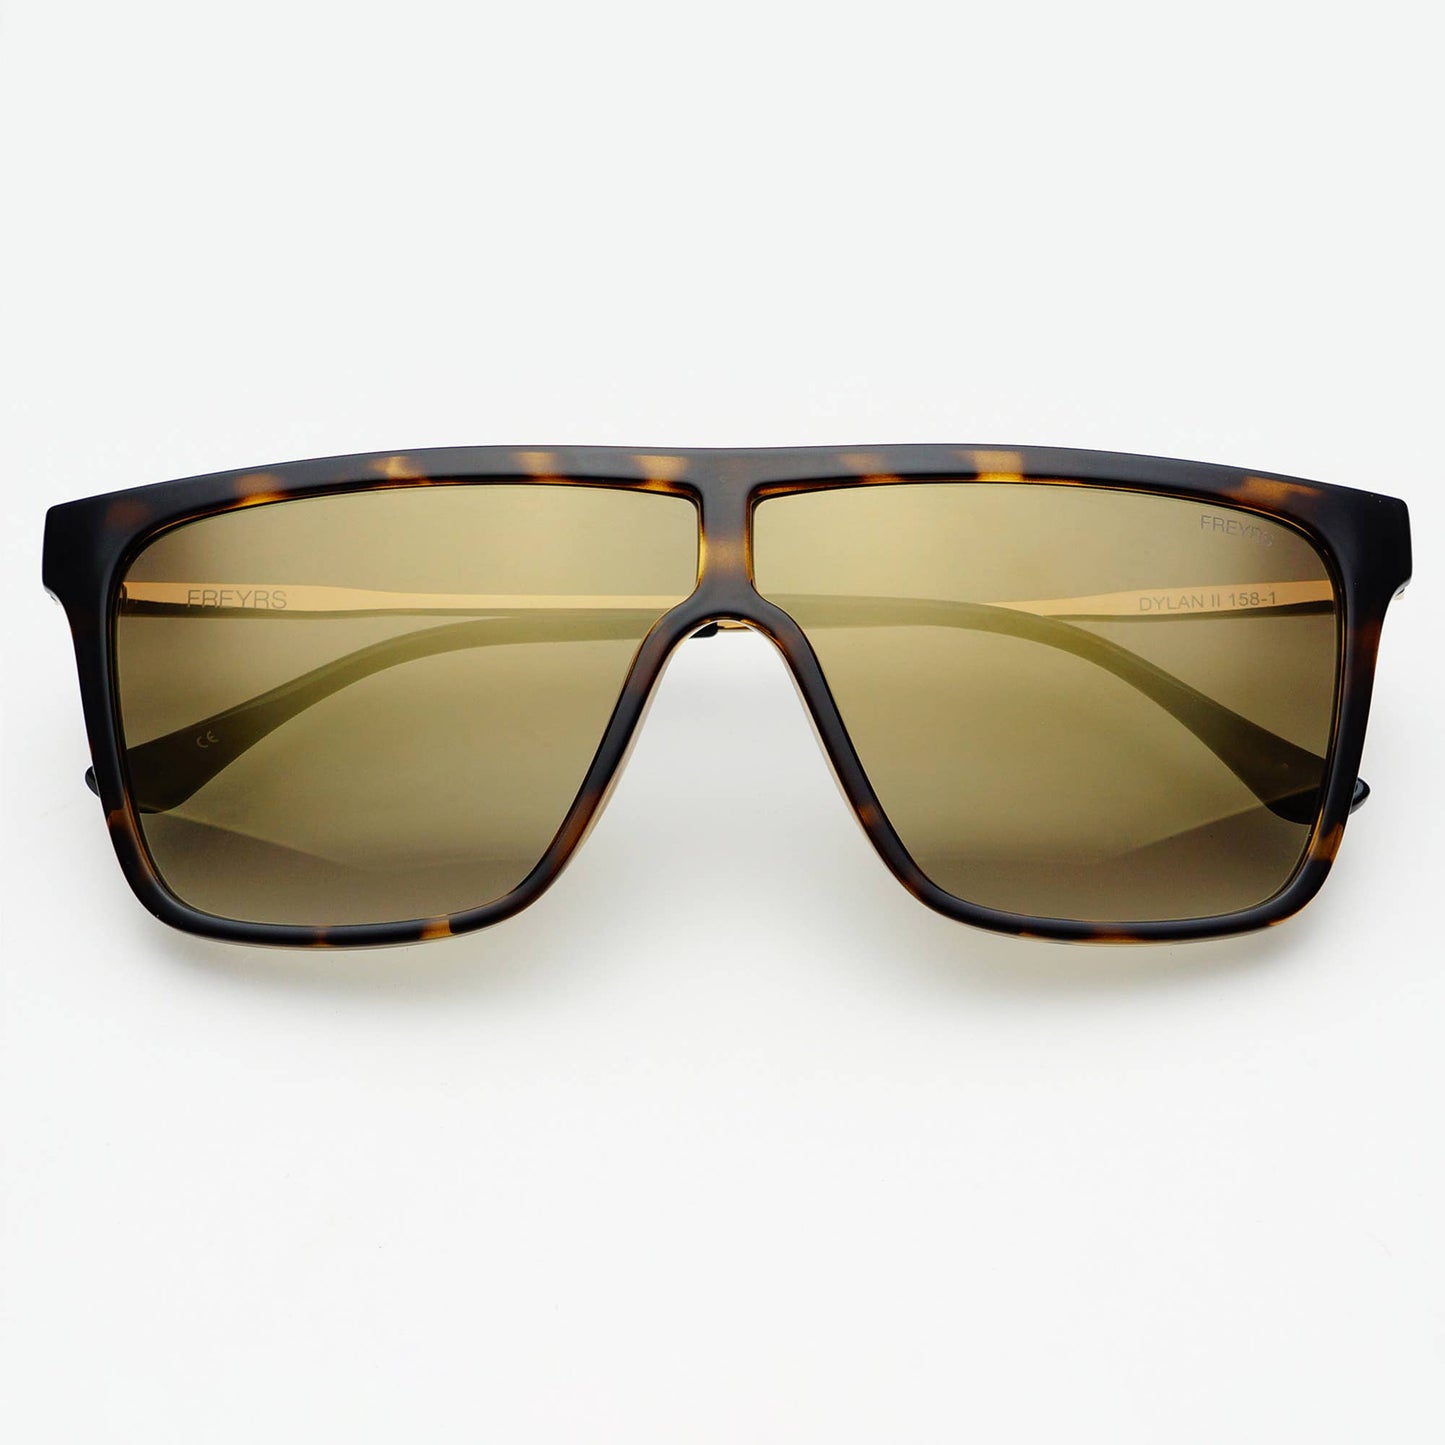 Dylan II Flat Top Unisex Sunglasses: Tortoise